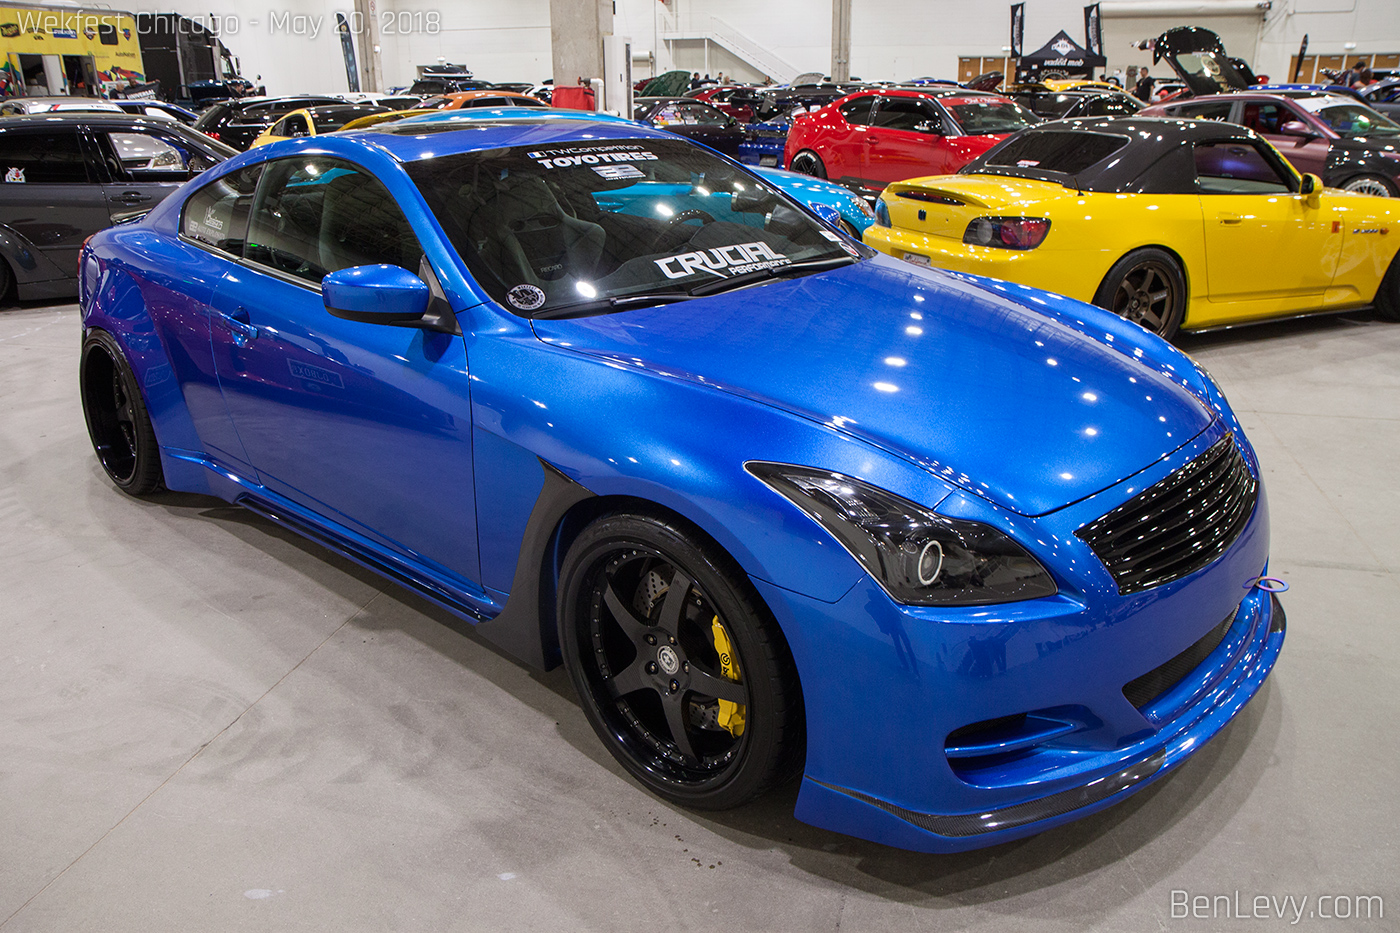 Blue Infiniti G37 coupe